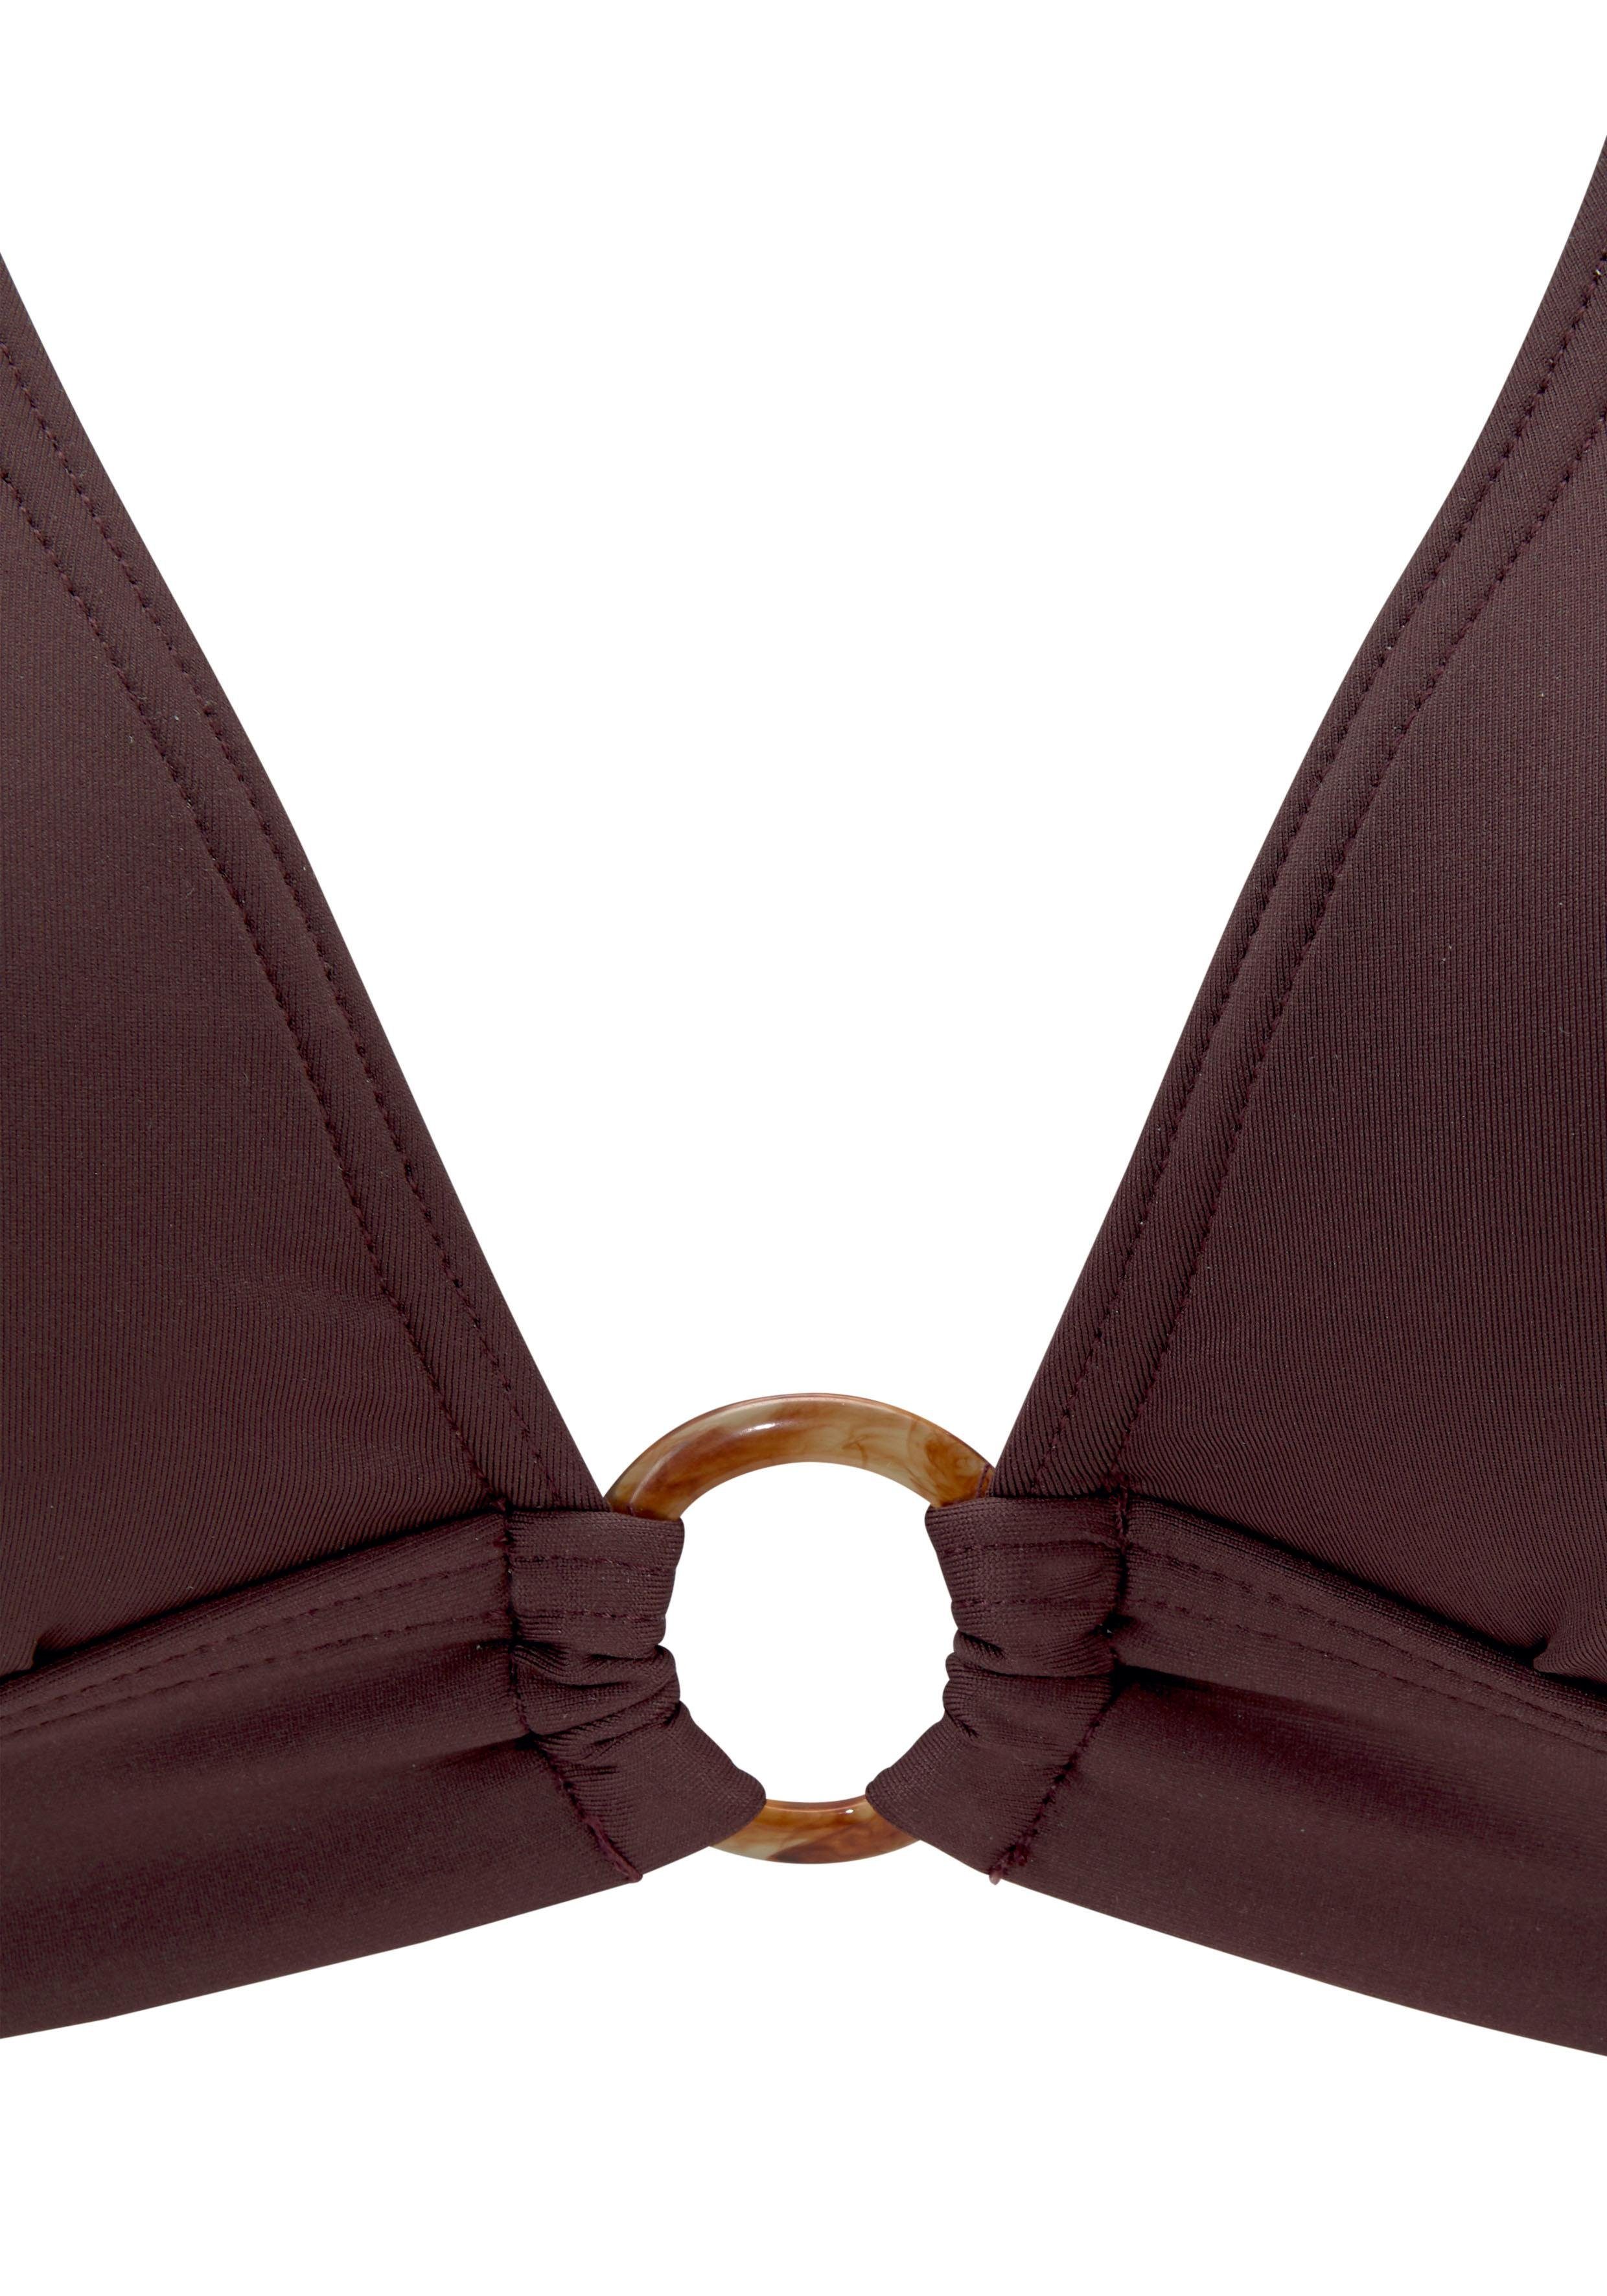 s.oliver red label beachwear triangel-bikinitop rome met brede boord bruin